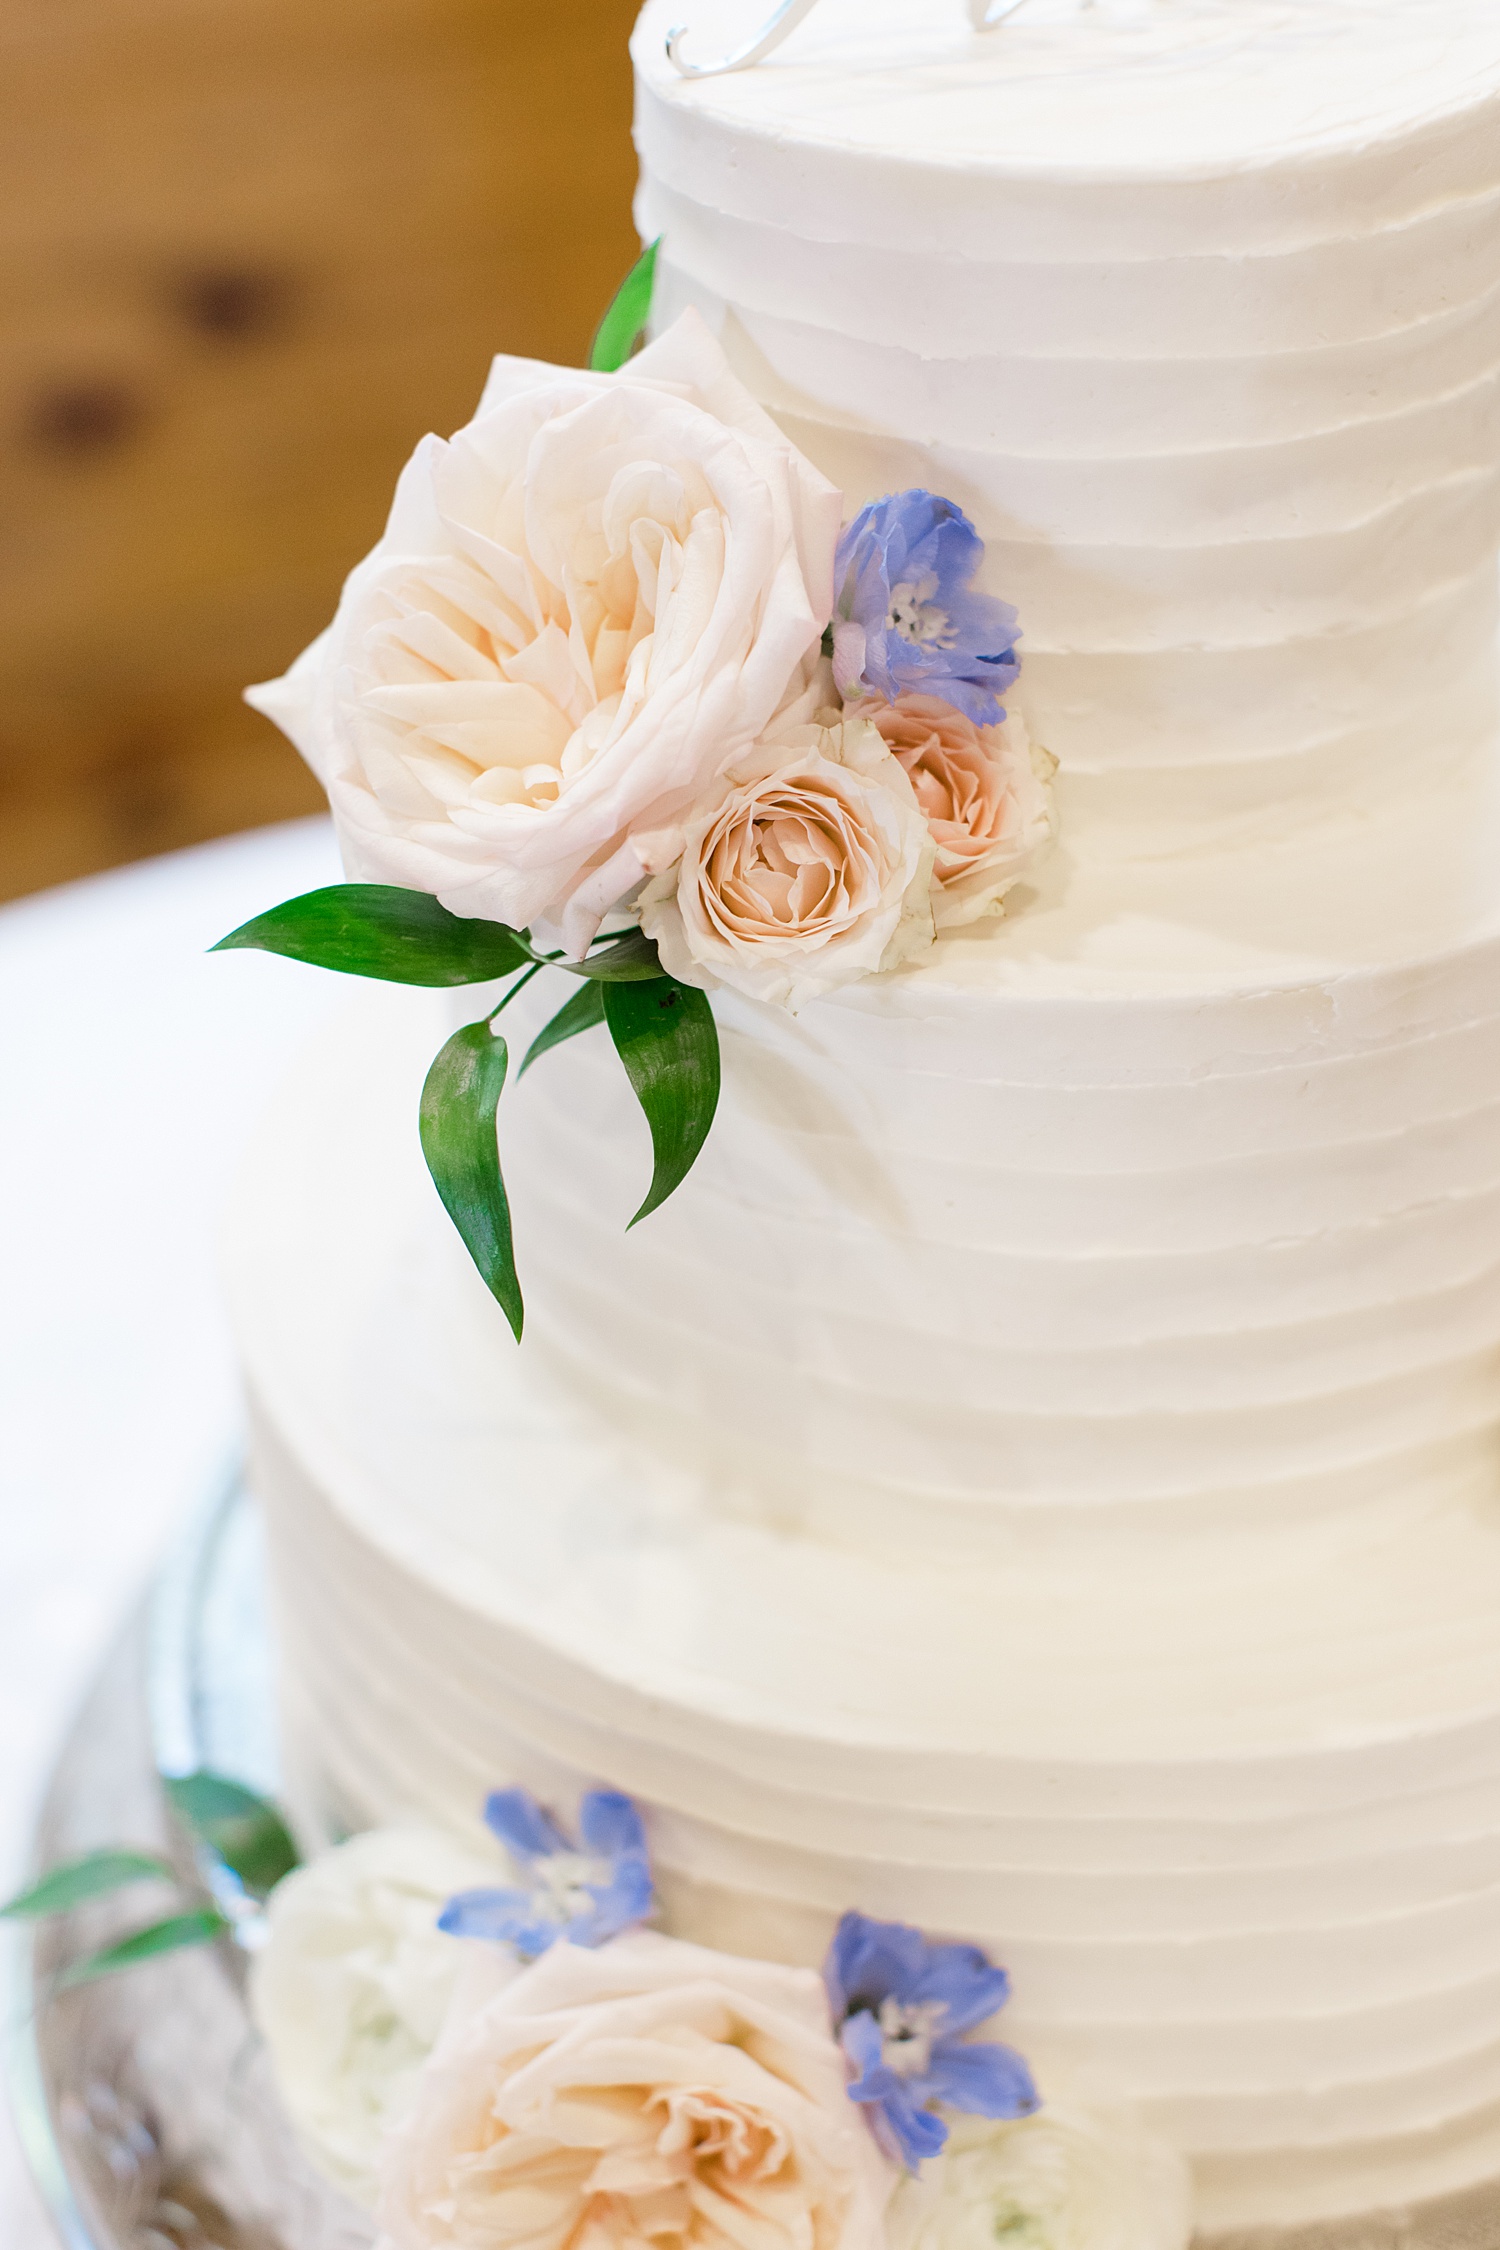 flower detail on wedding cake